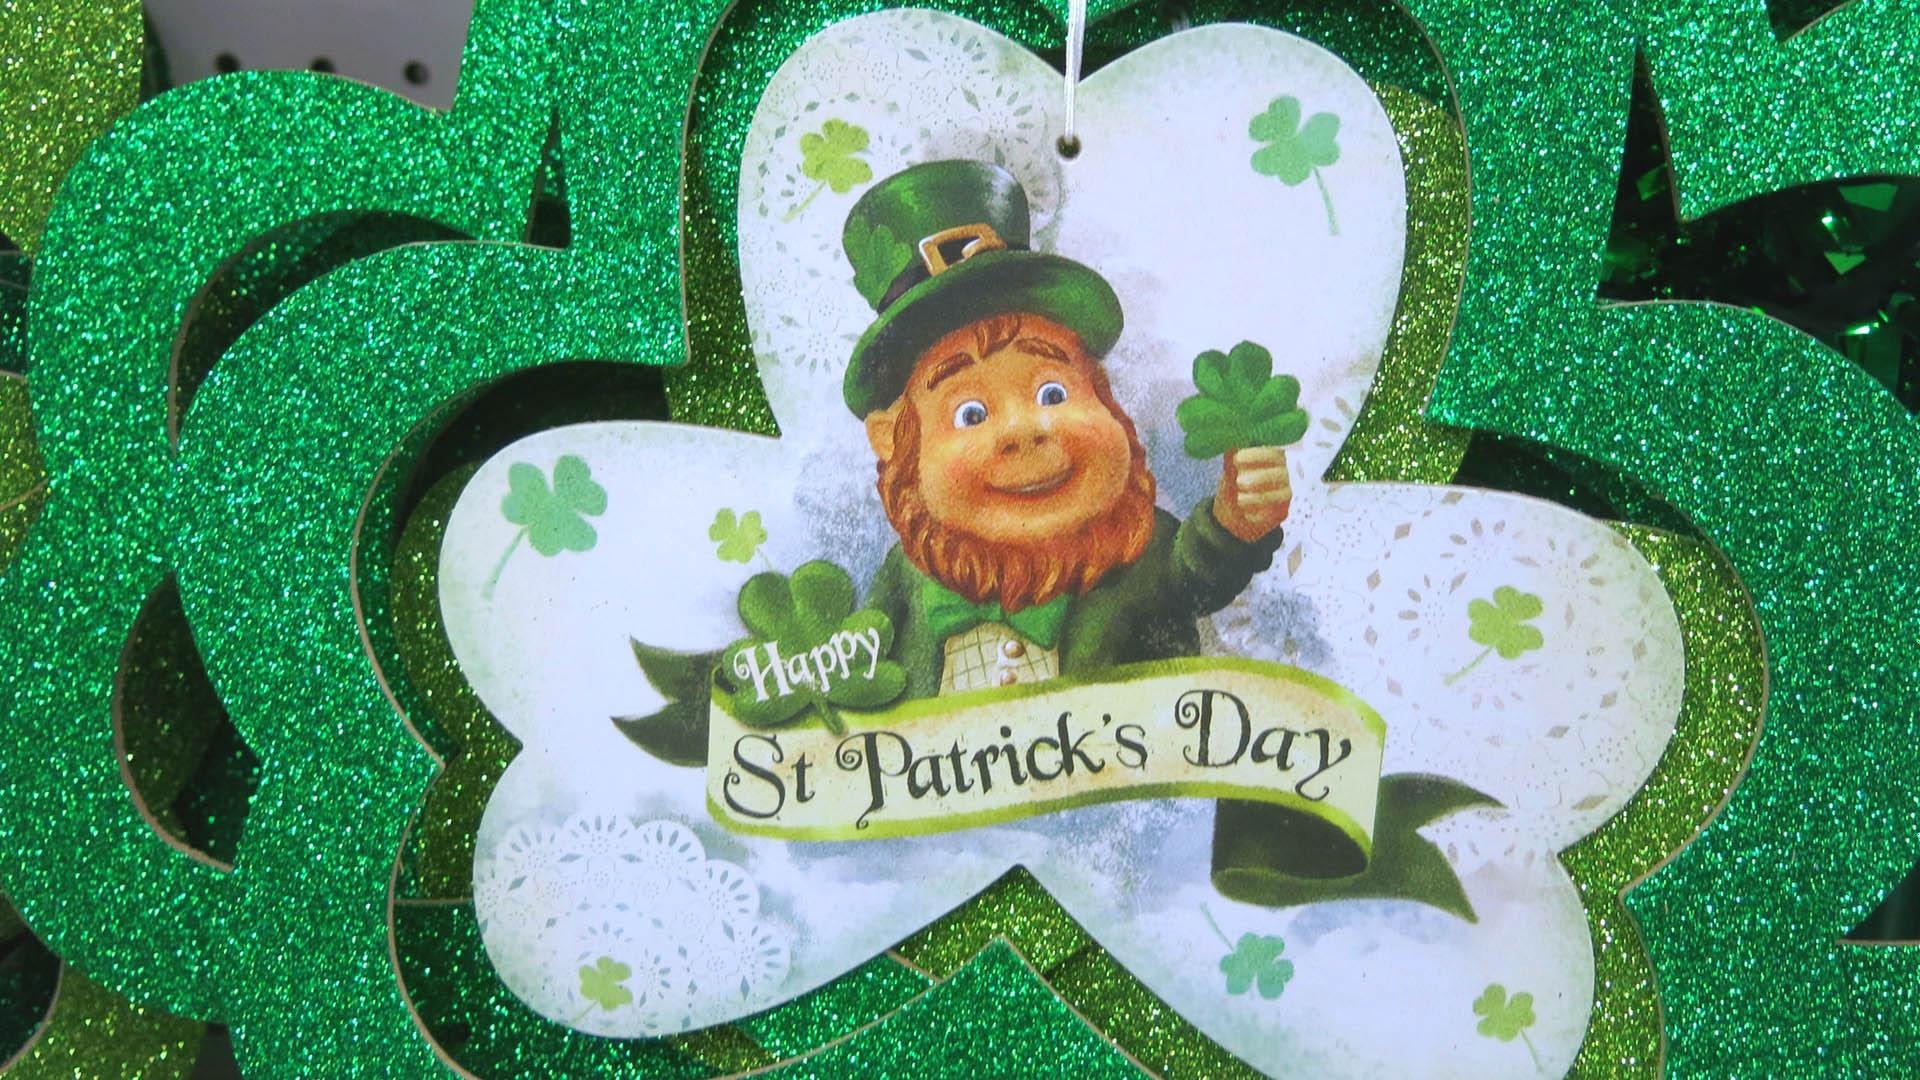 Pat day. Северная Ирландия Святой Патрик. Saint Patrick's Day. День Святого Патрика открытки. День Святого Патрика в Ирландии.